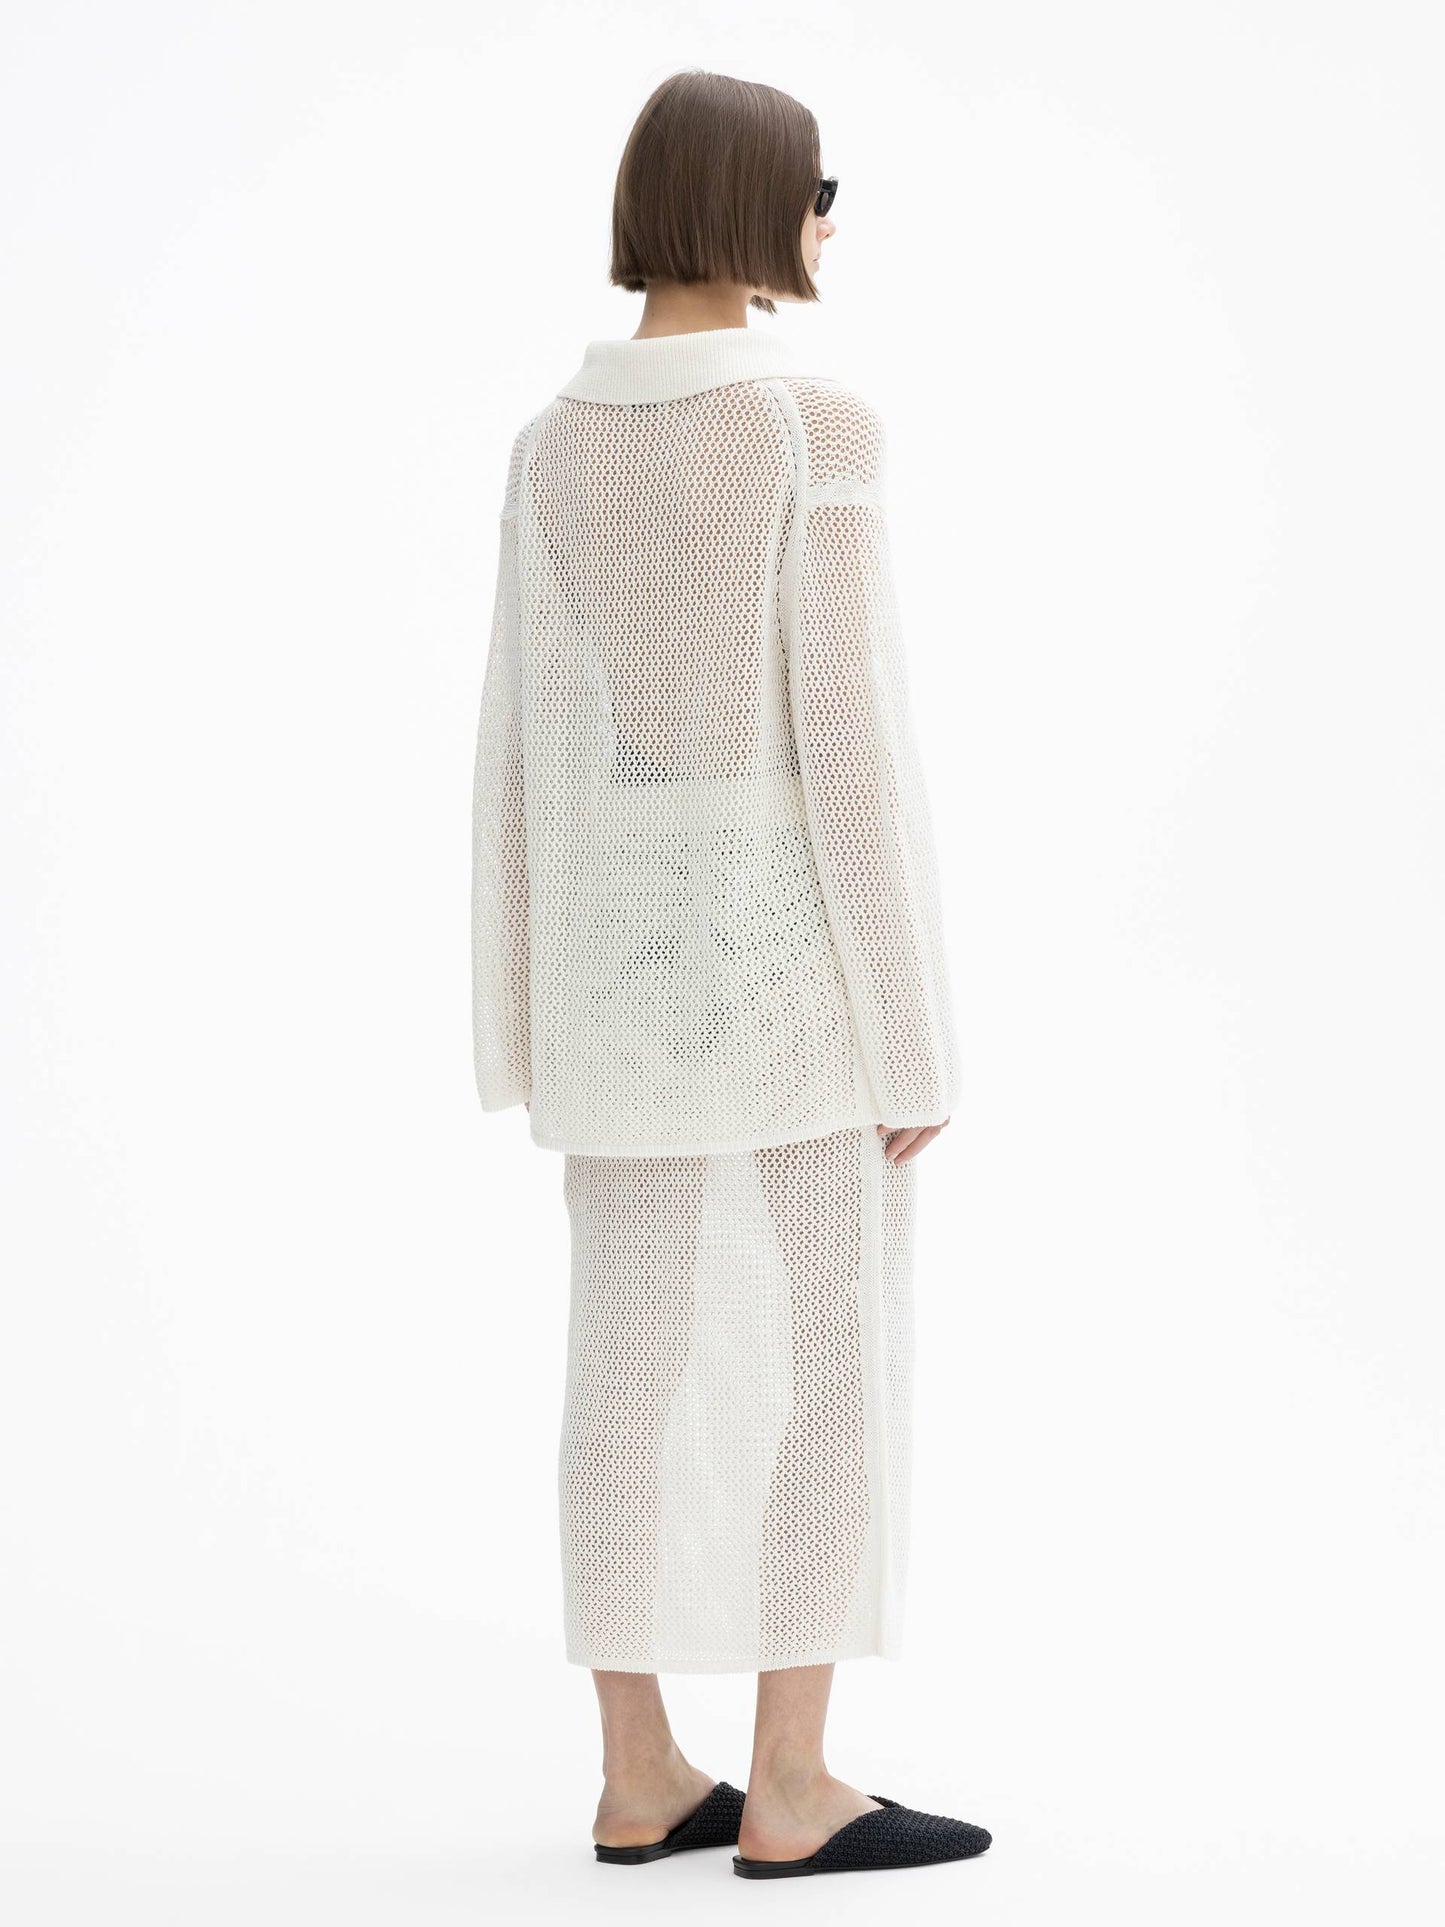 Crochet Knit, Off White, Pullover